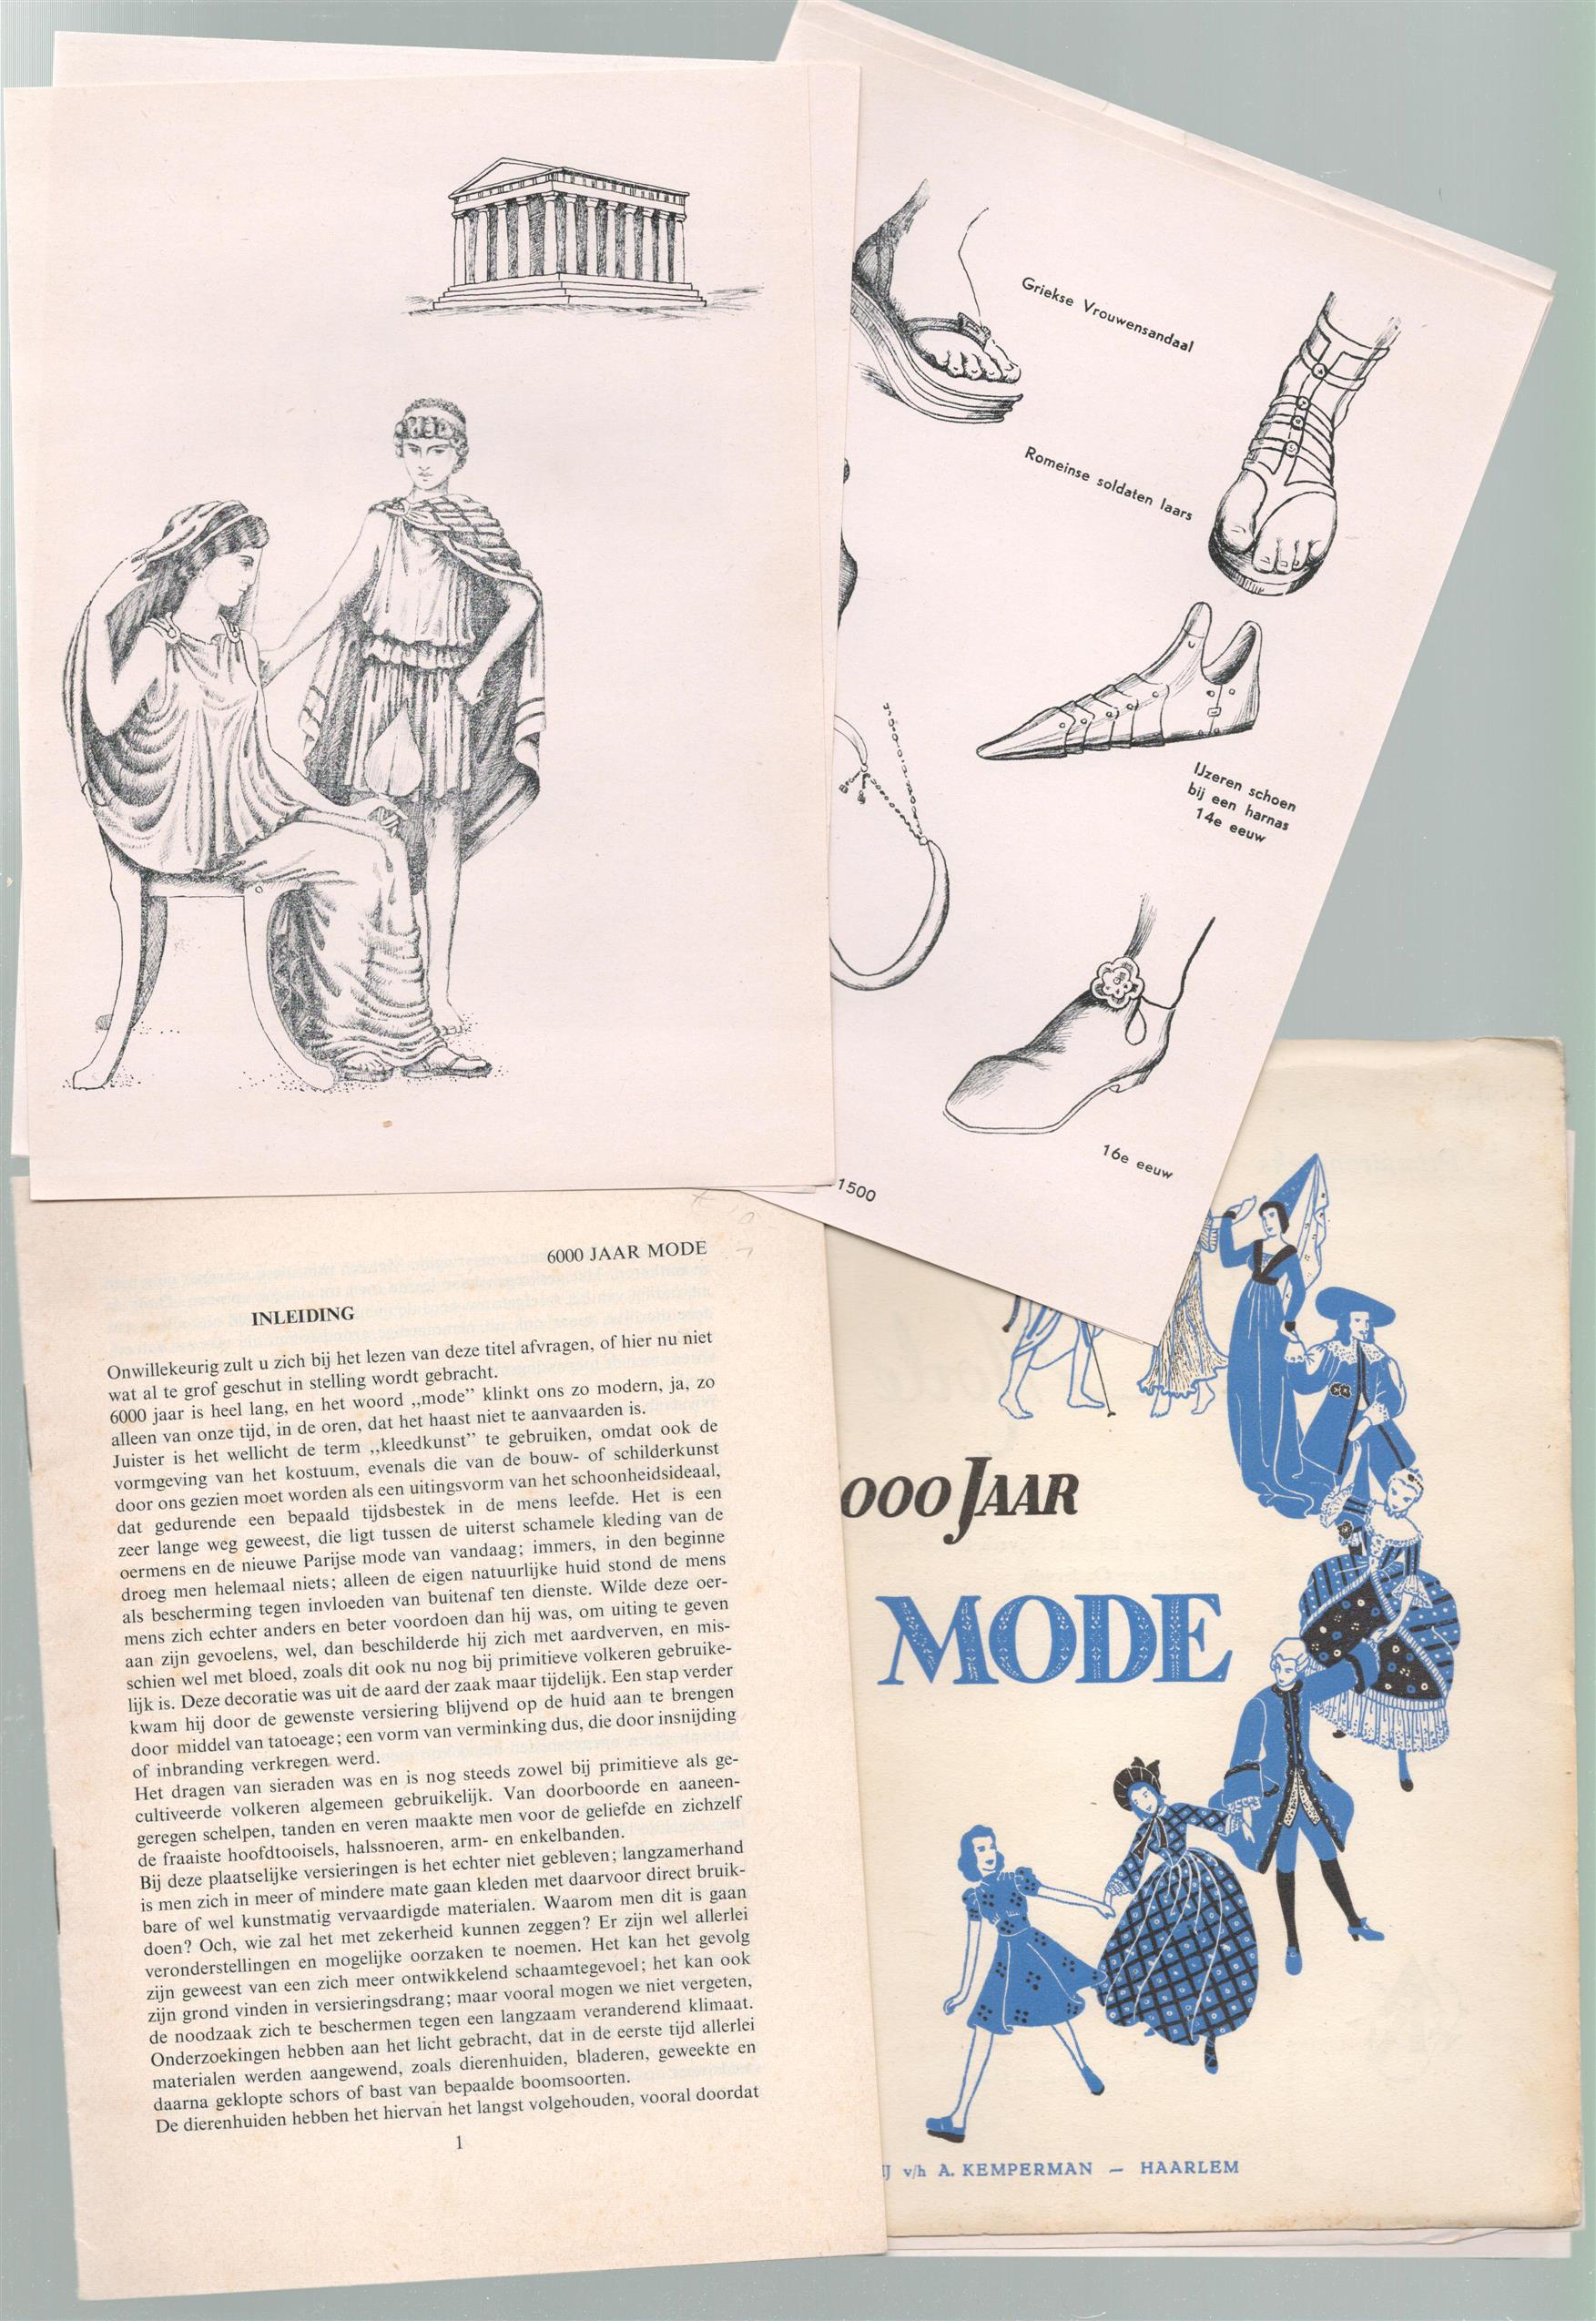 C.Boele van Hensbroek , W.L.P. burger, W.M.H. Elffrich, S.H. Hoyte Veder-de Glee - 6000 jaar mode.